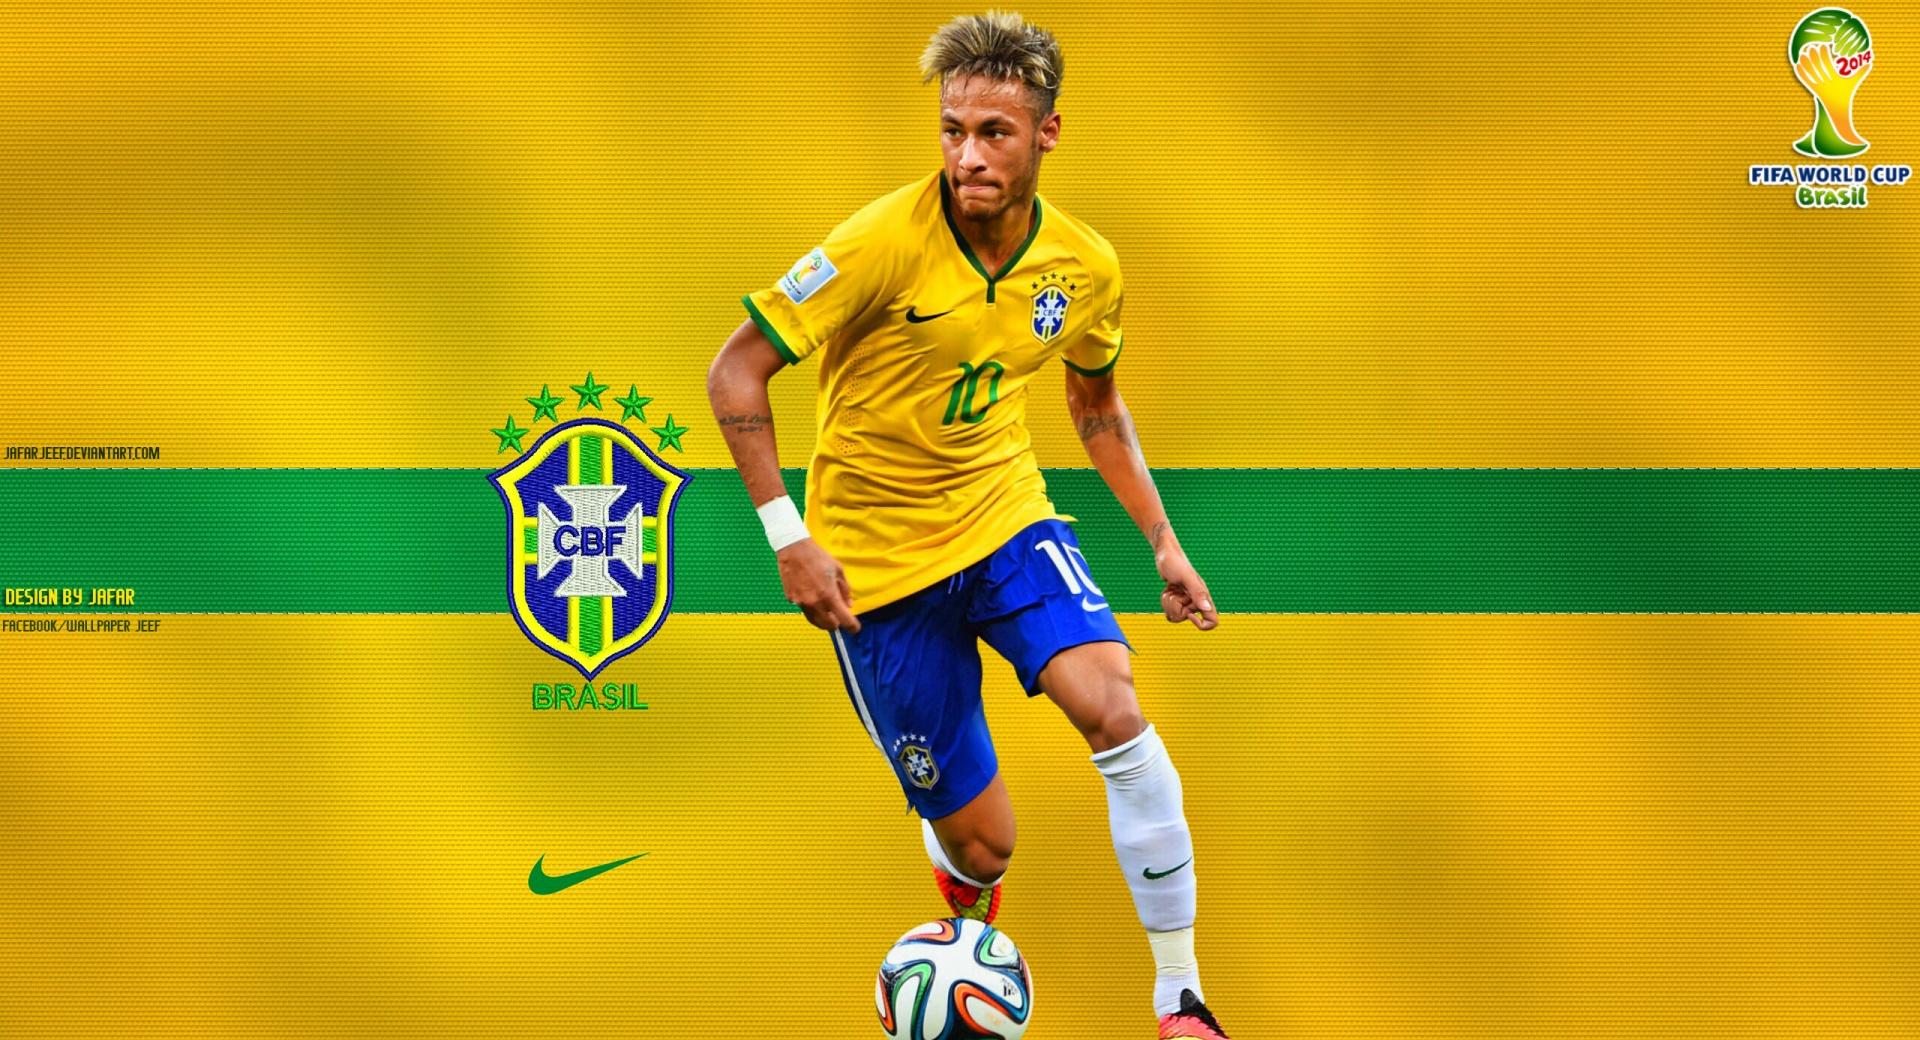 NEYMAR BRAZIL WORLD CUP 2014 at 1024 x 1024 iPad size wallpapers HD quality